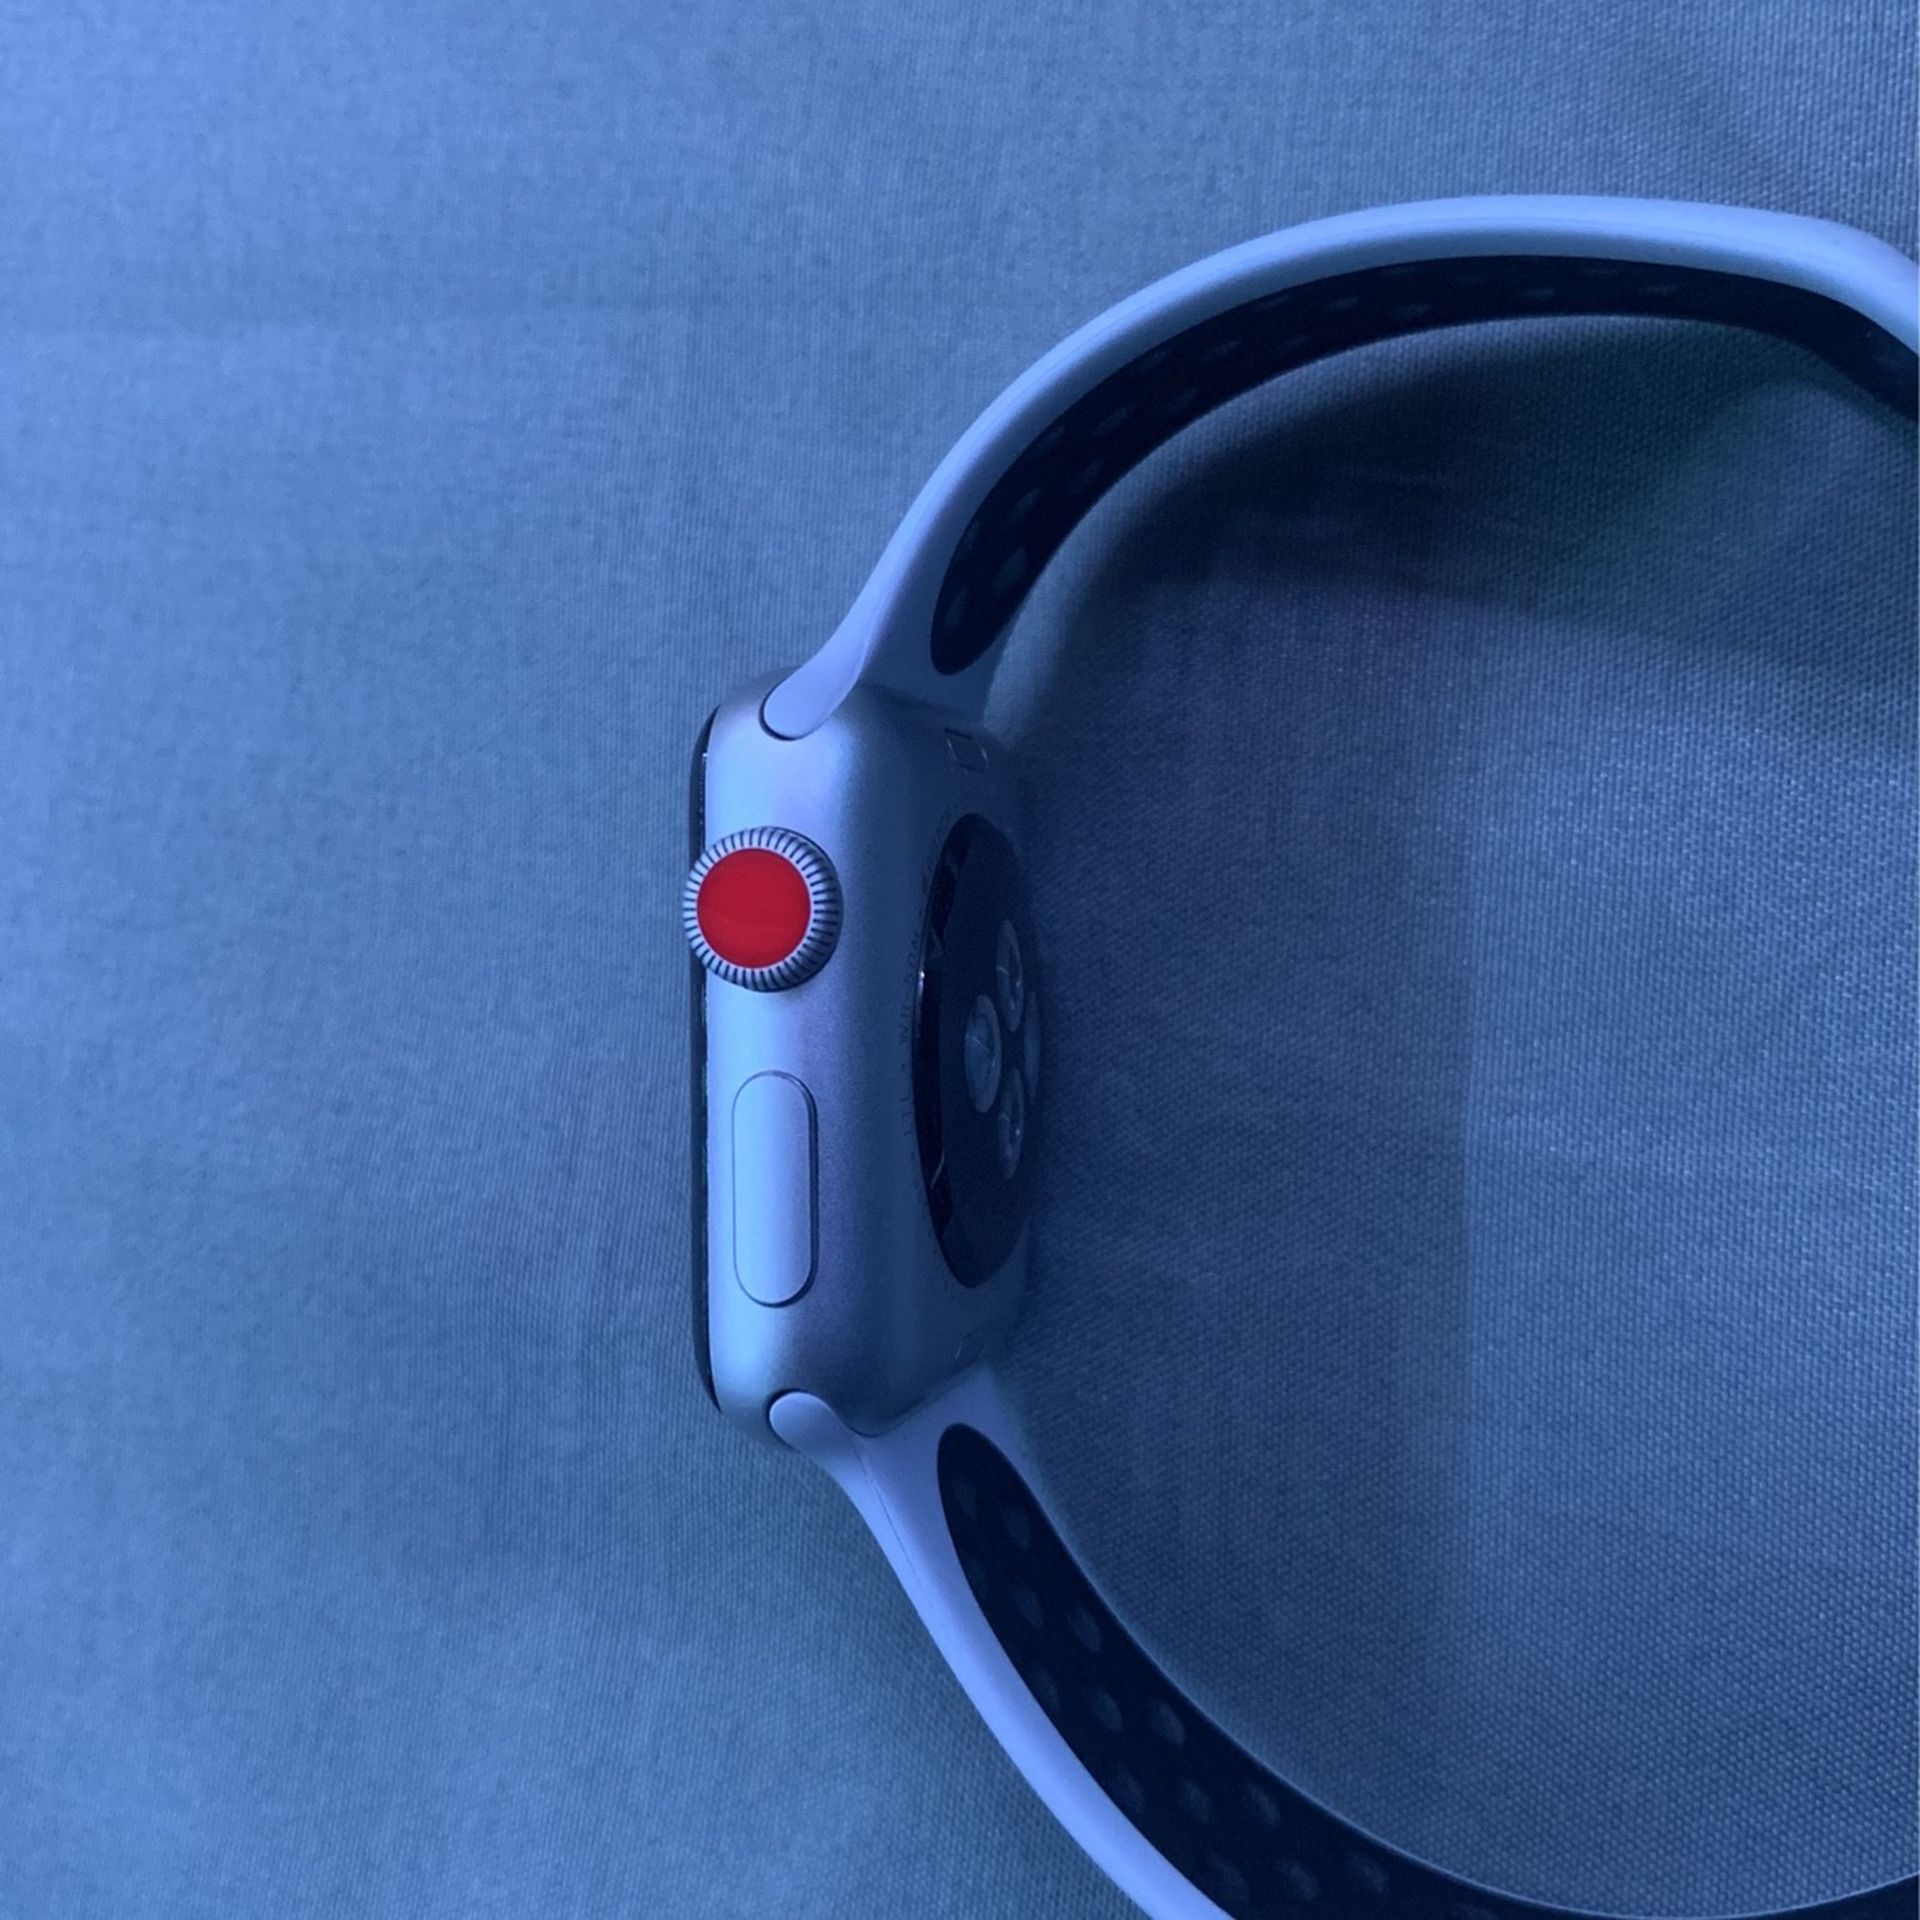 Apple watch Series 3 gps+celluer nike eddition